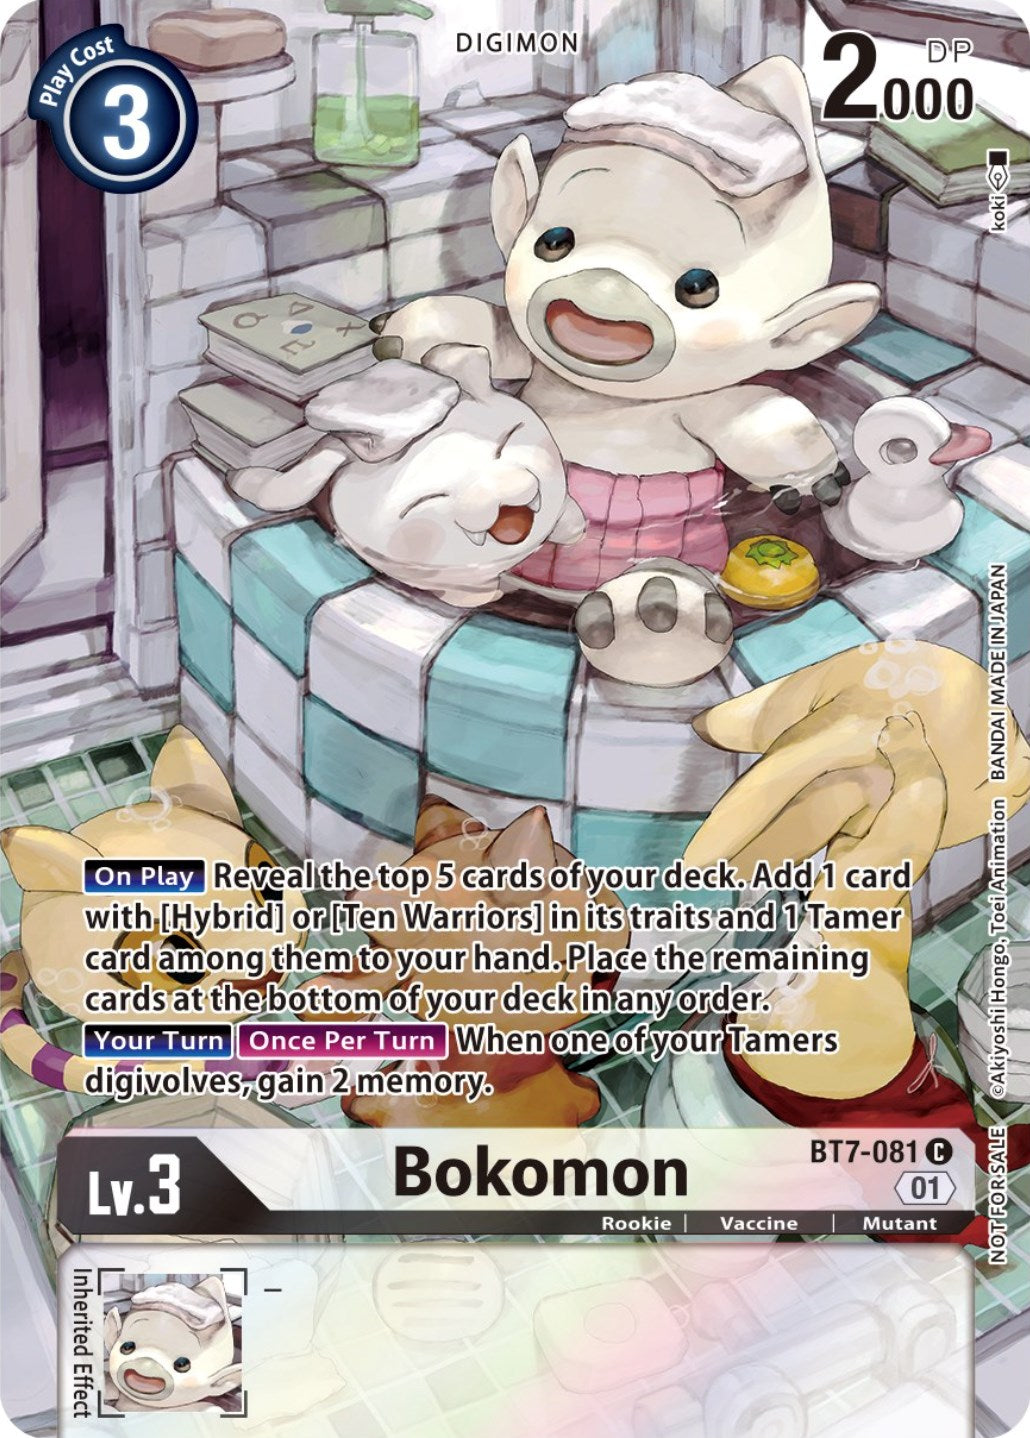 Bokomon [BT7-081] (2nd Anniversary Frontier Card) [Next Adventure Promos] | Total Play